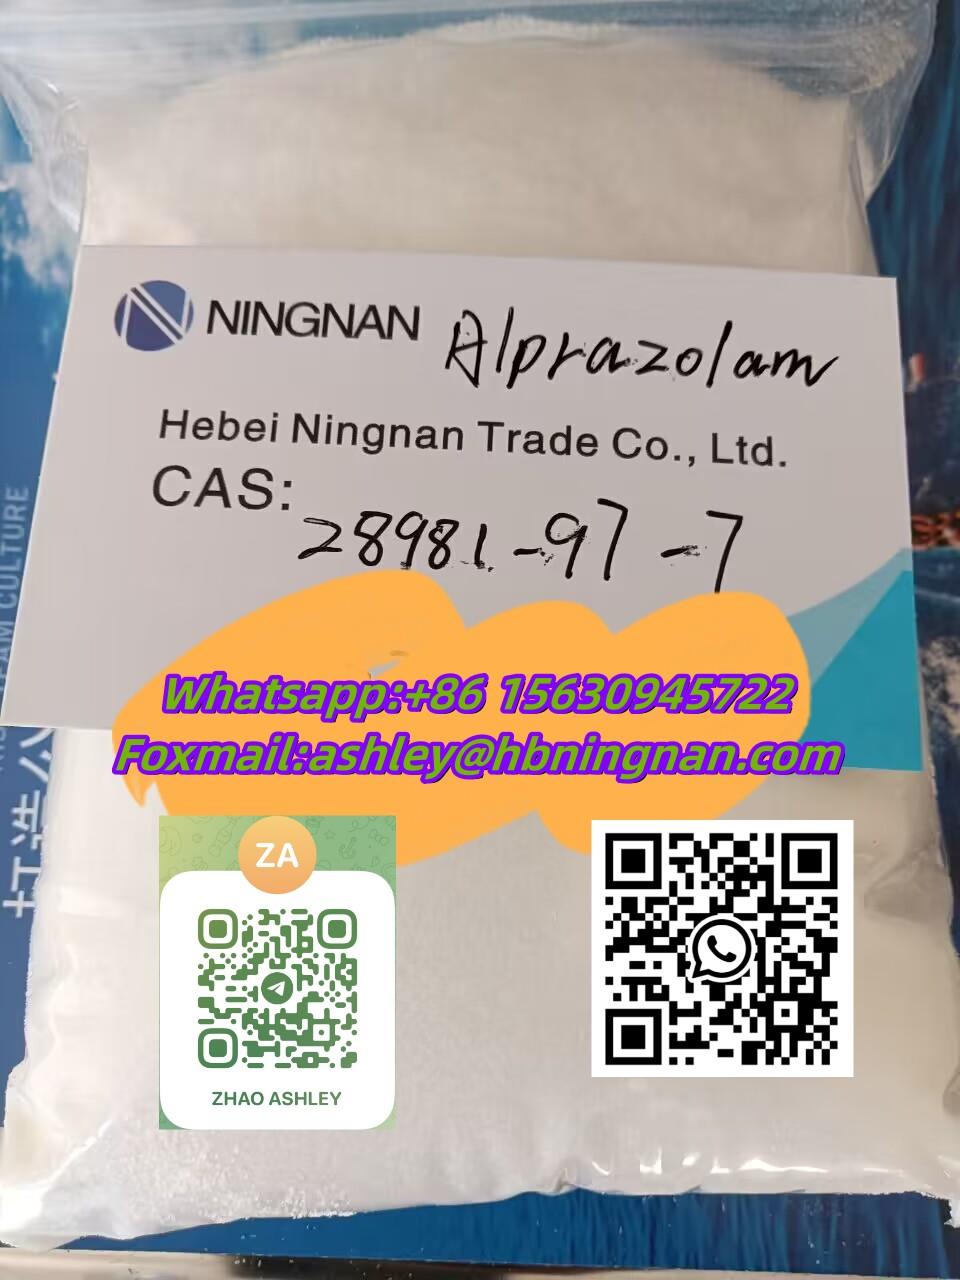 cas 28981-97-7  Alprazolam 100% safe delivery!,28981-97-7,ningnan ,Chemicals/Desiccants